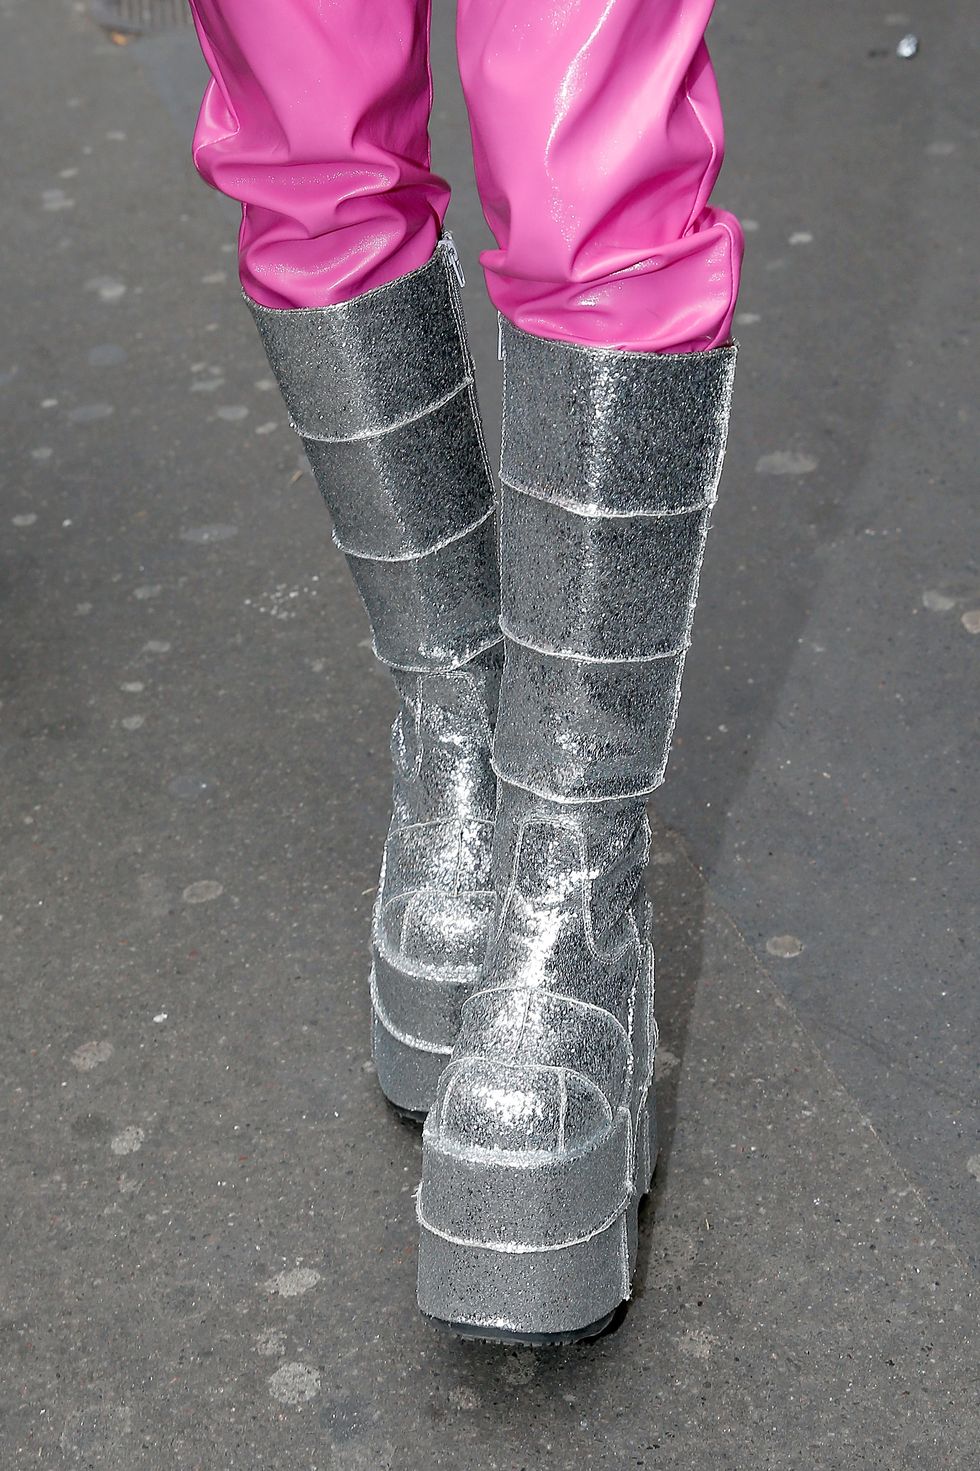 Silver platform boots at Paris Fashion Week Haute Couture SS15